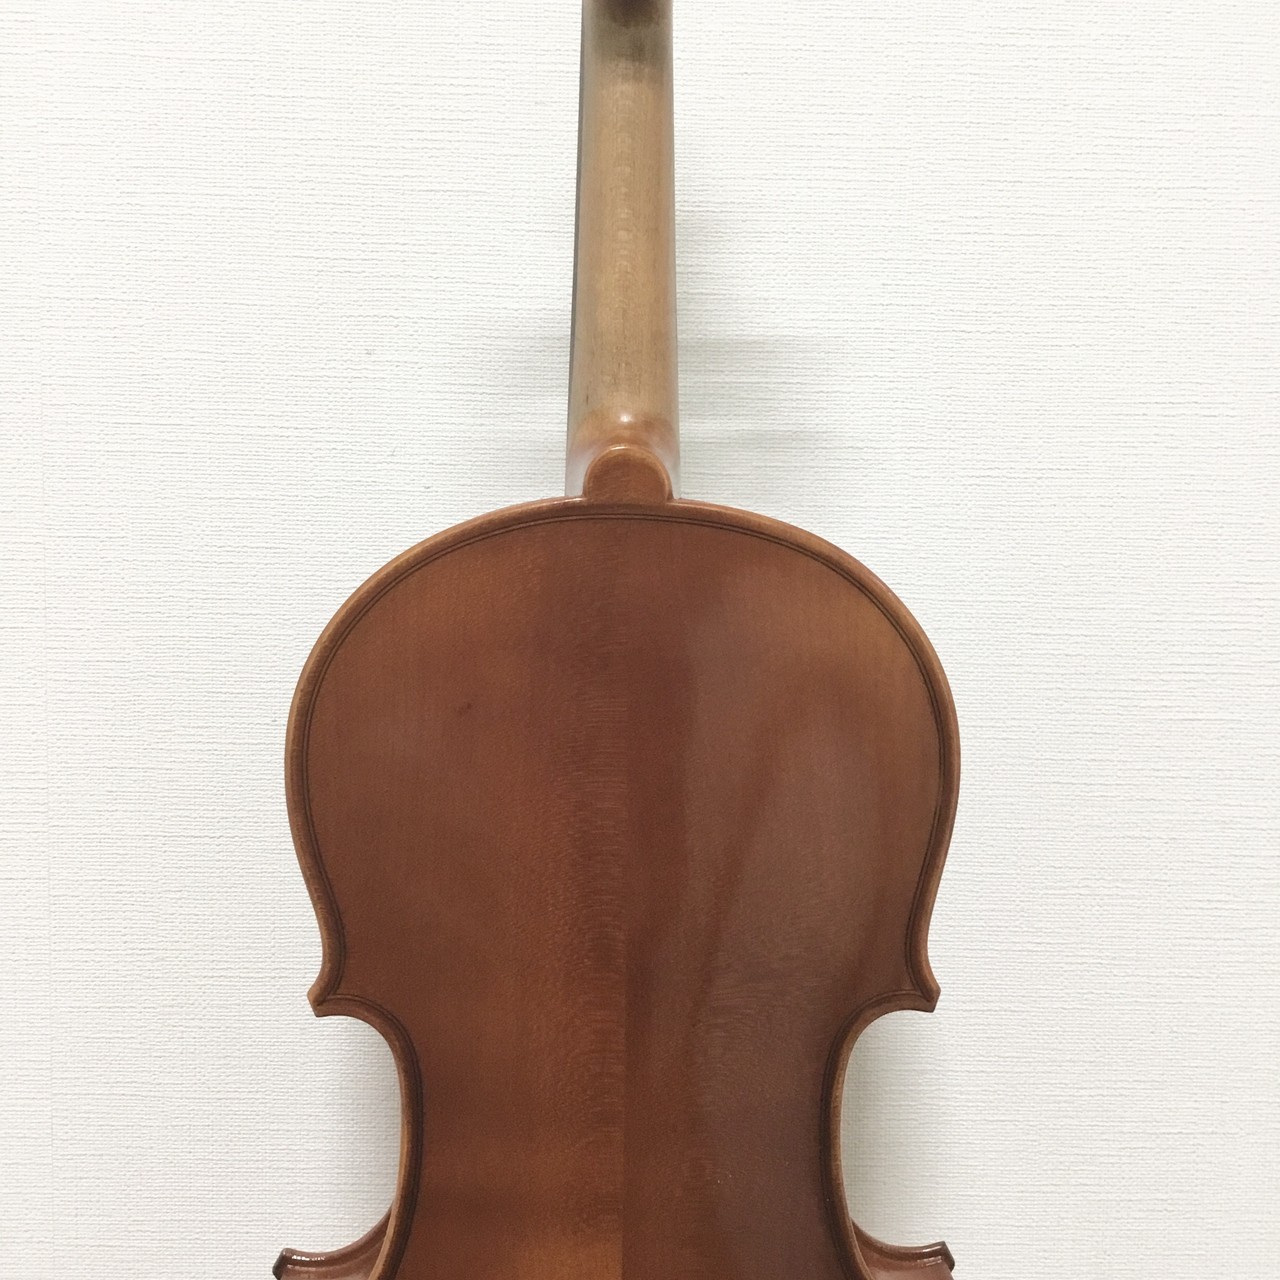 Andreas Eastmanアンドレアイーストマン 中古バイオリン VLセット3